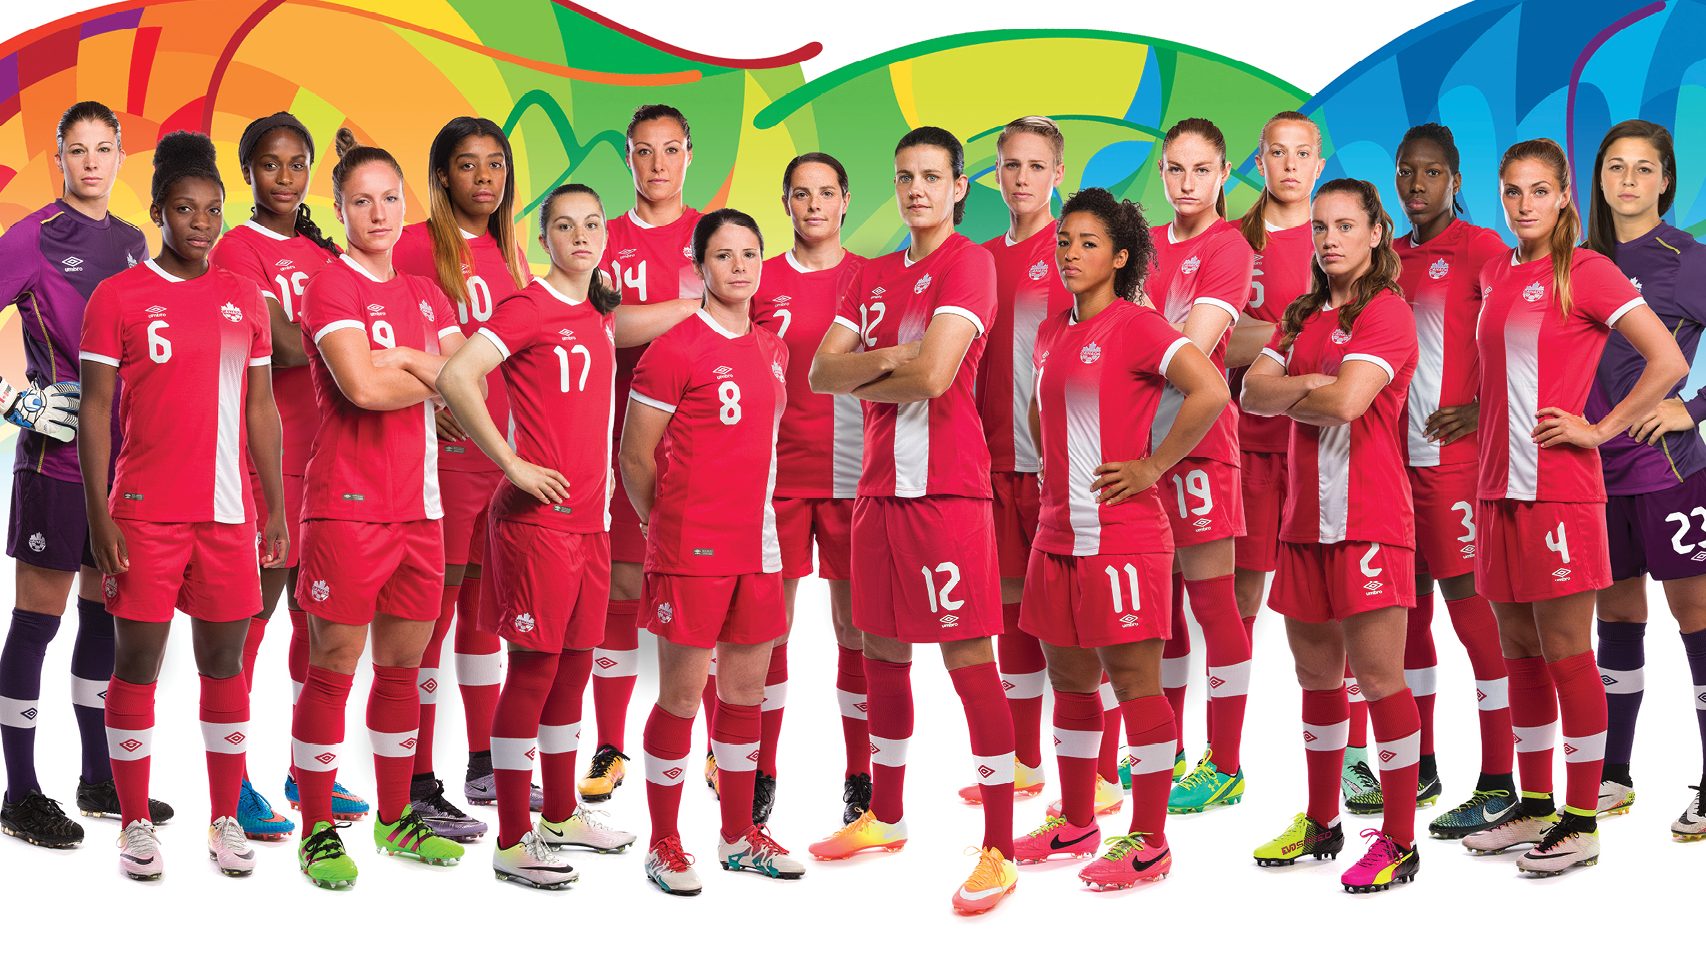 team canada women's soccer jersey